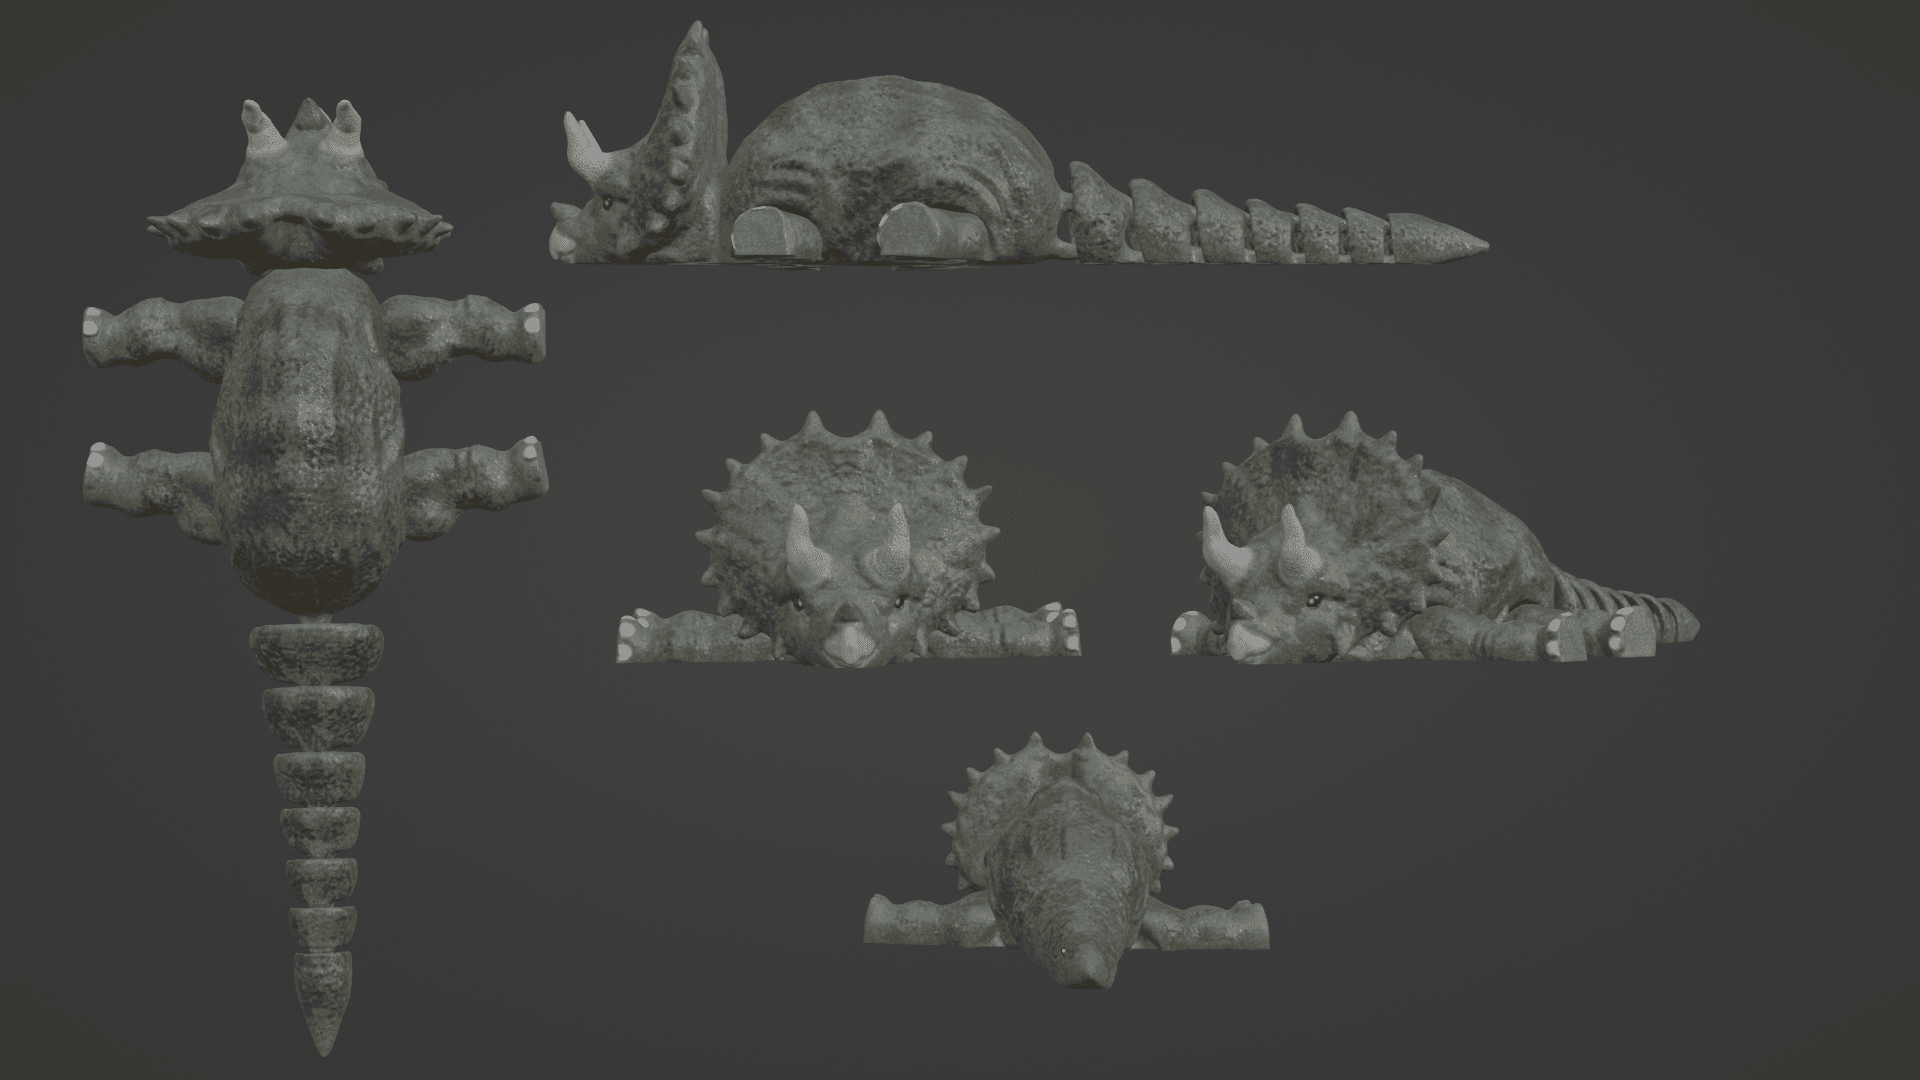 Triceratops 3d model